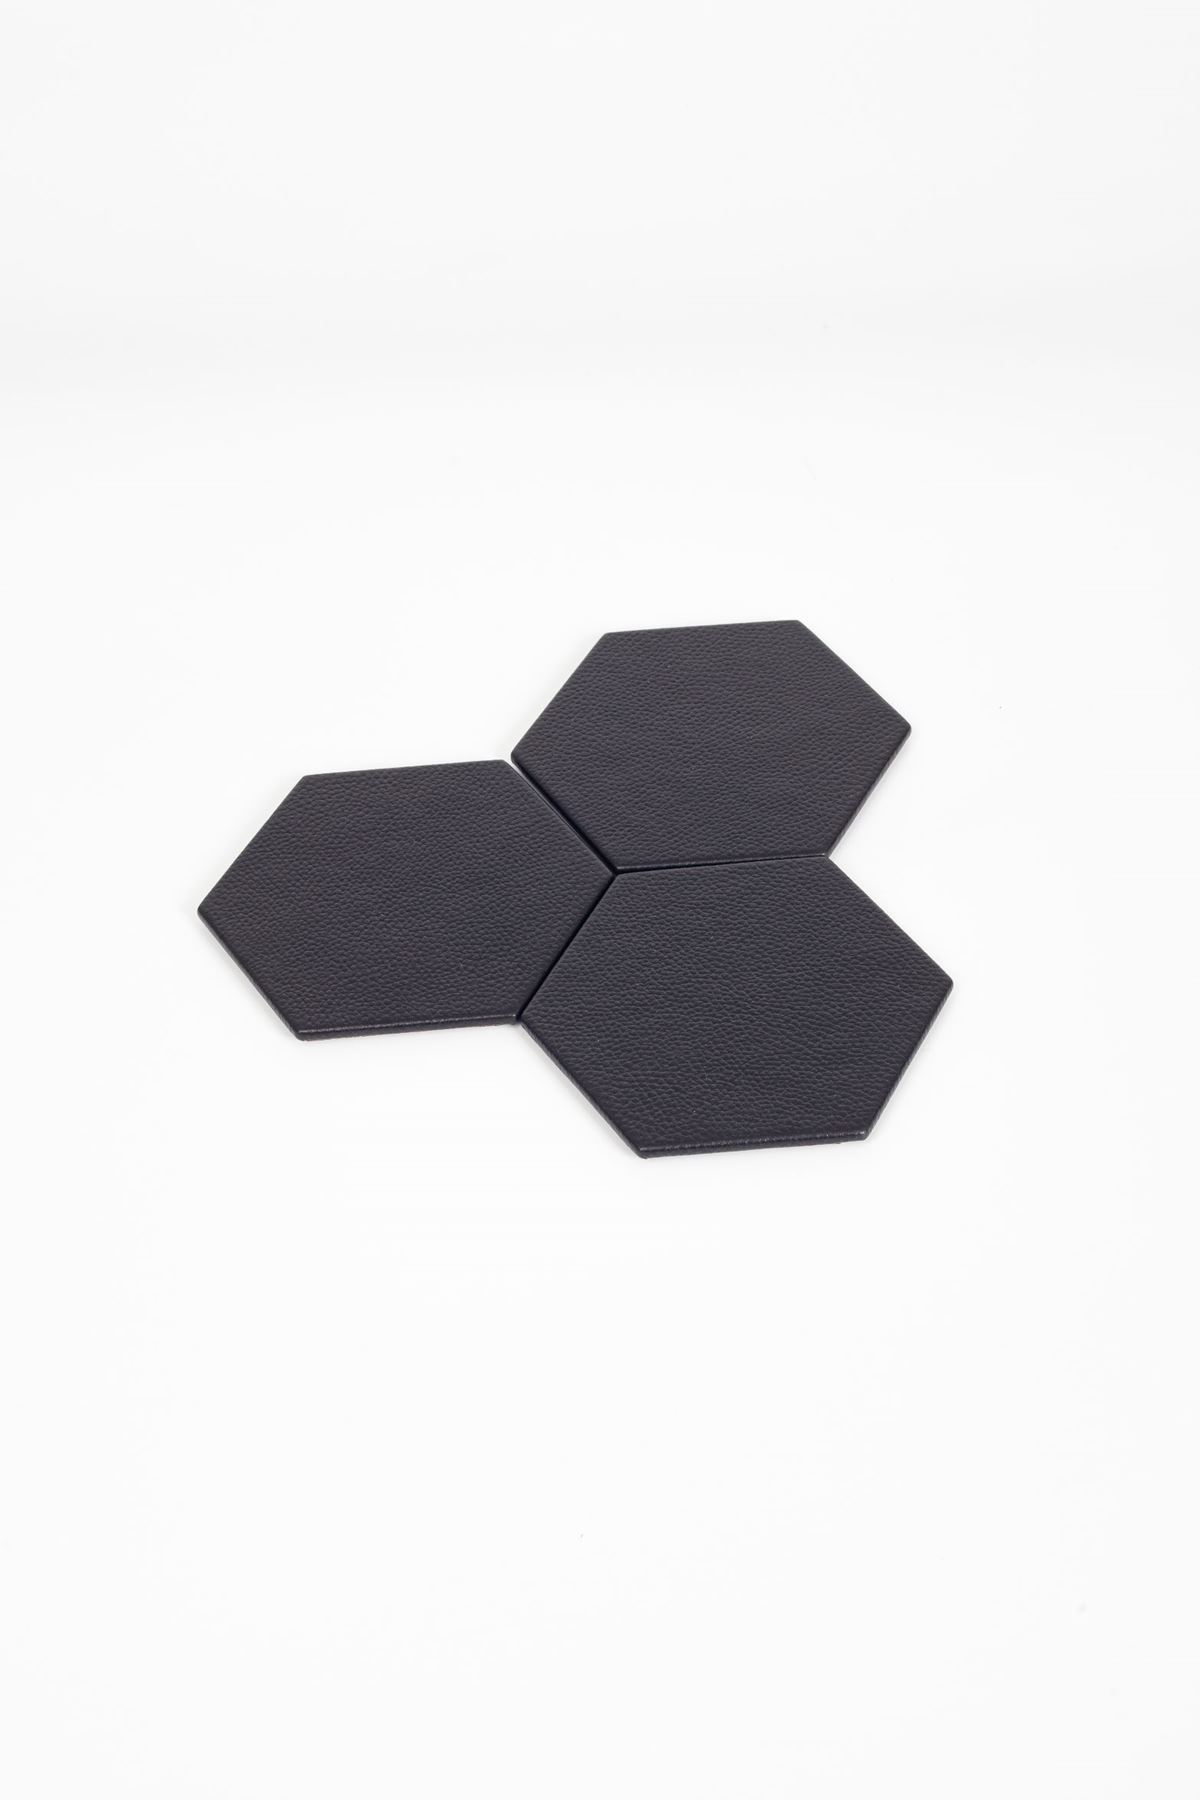 Black Leather Hexagon Coaster 3 Piece